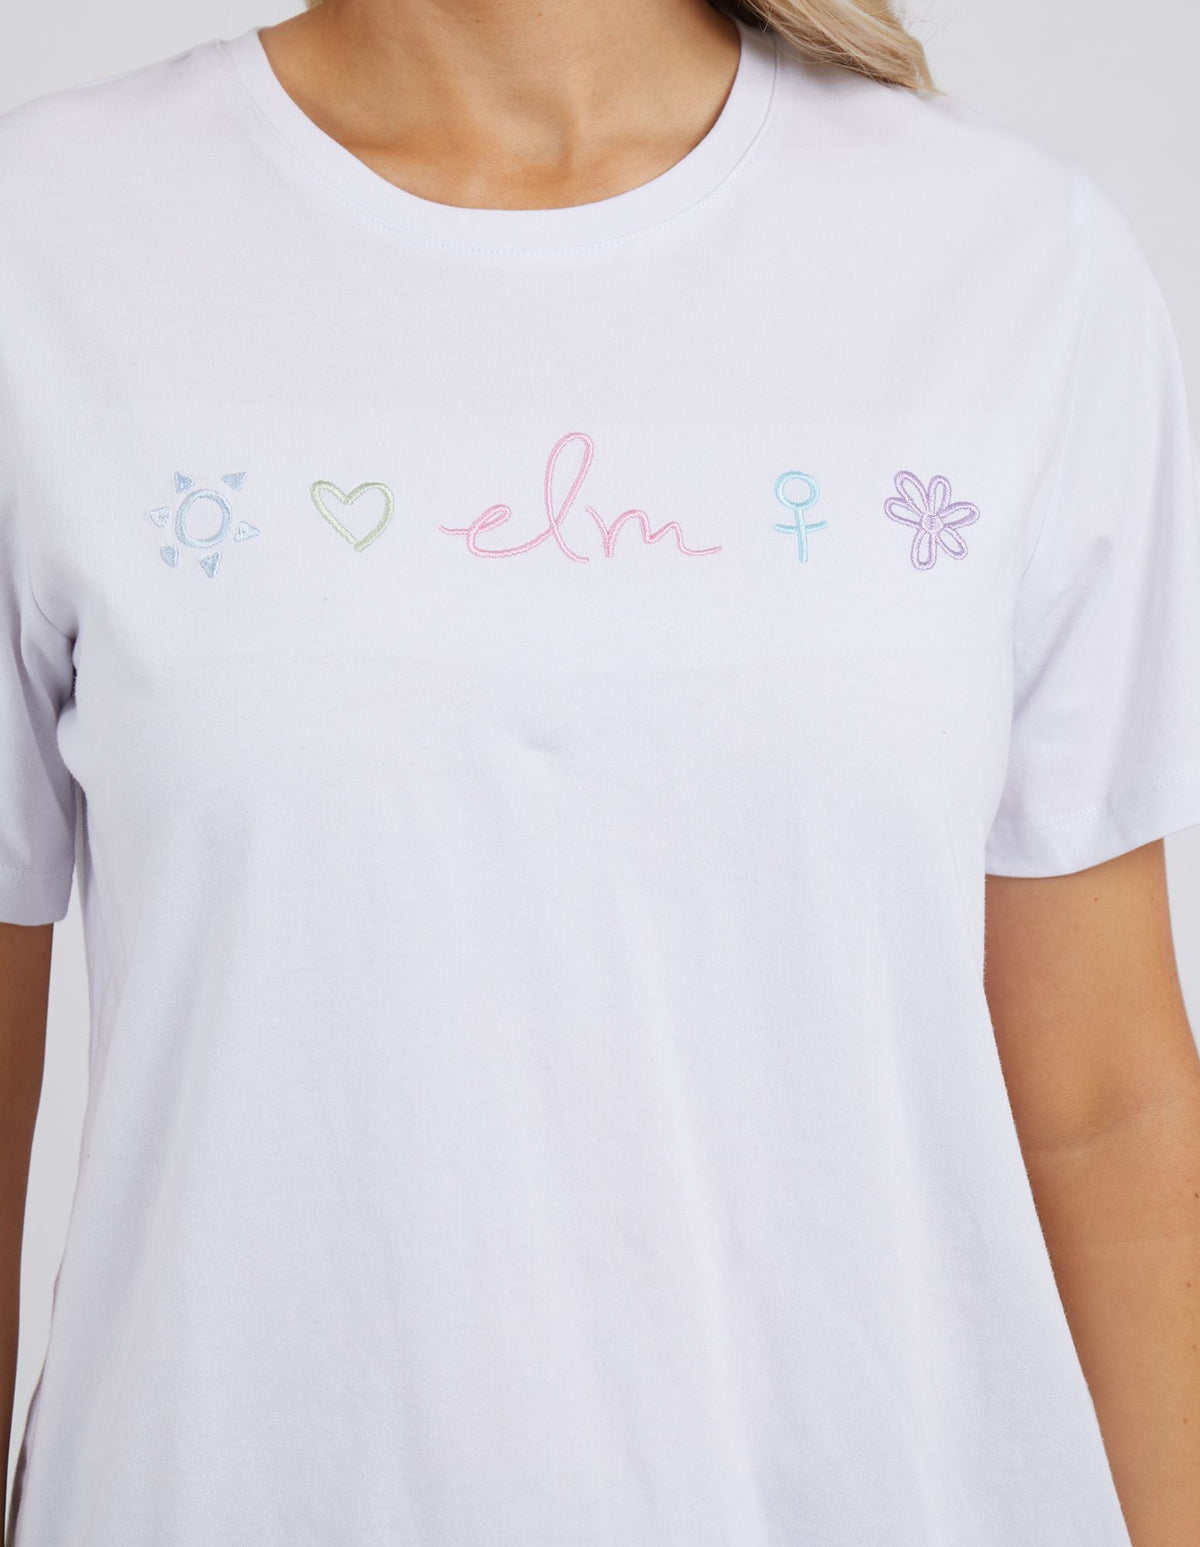 Symbols S/S Tee - White/Multi Embroidery  - Elm Lifestyle